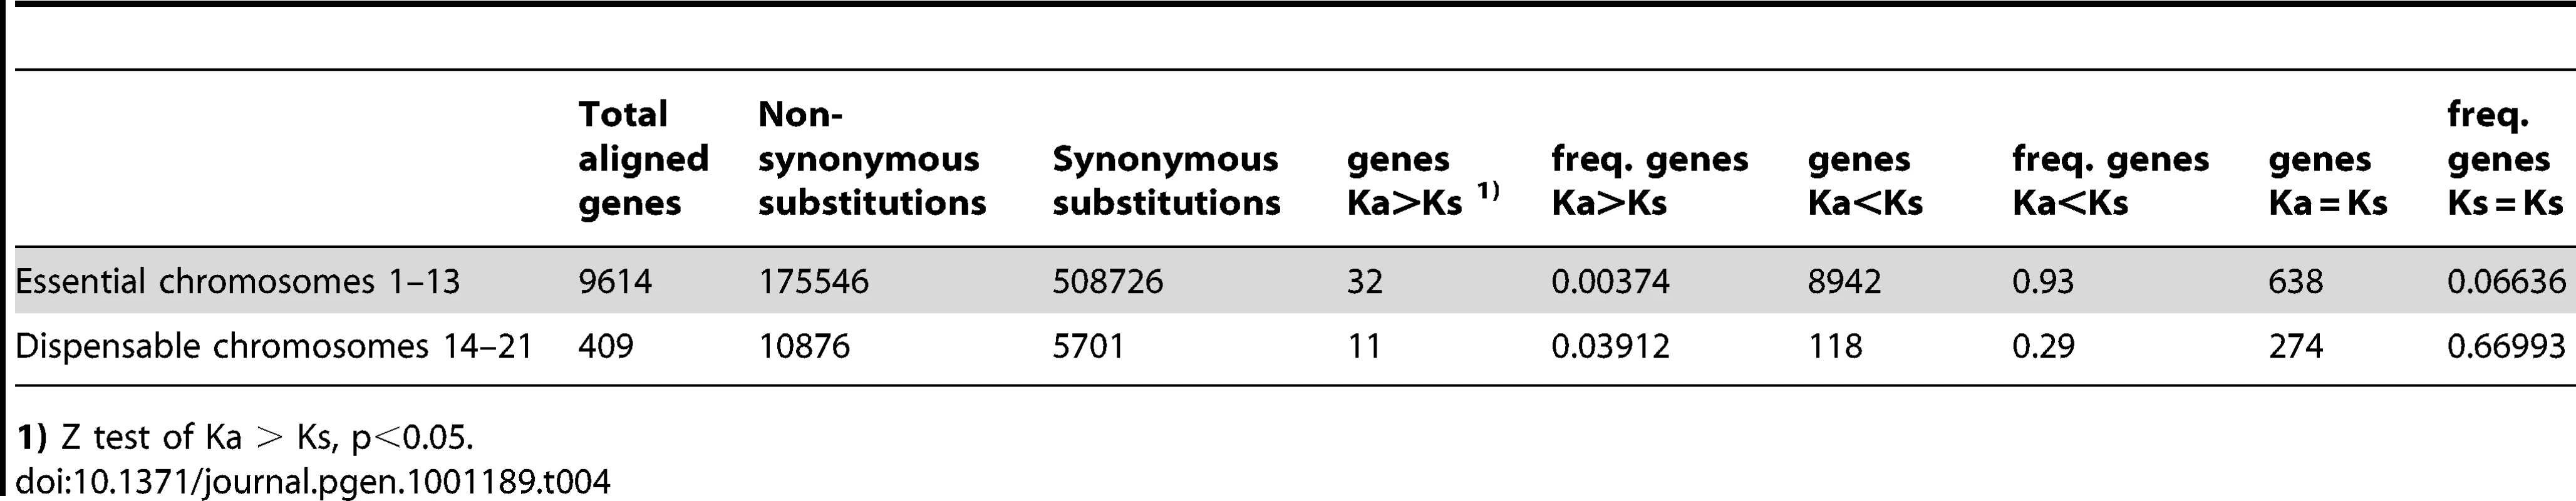 Ka/Ks ratios of aligned genes on essential and dispensable chromosomes.